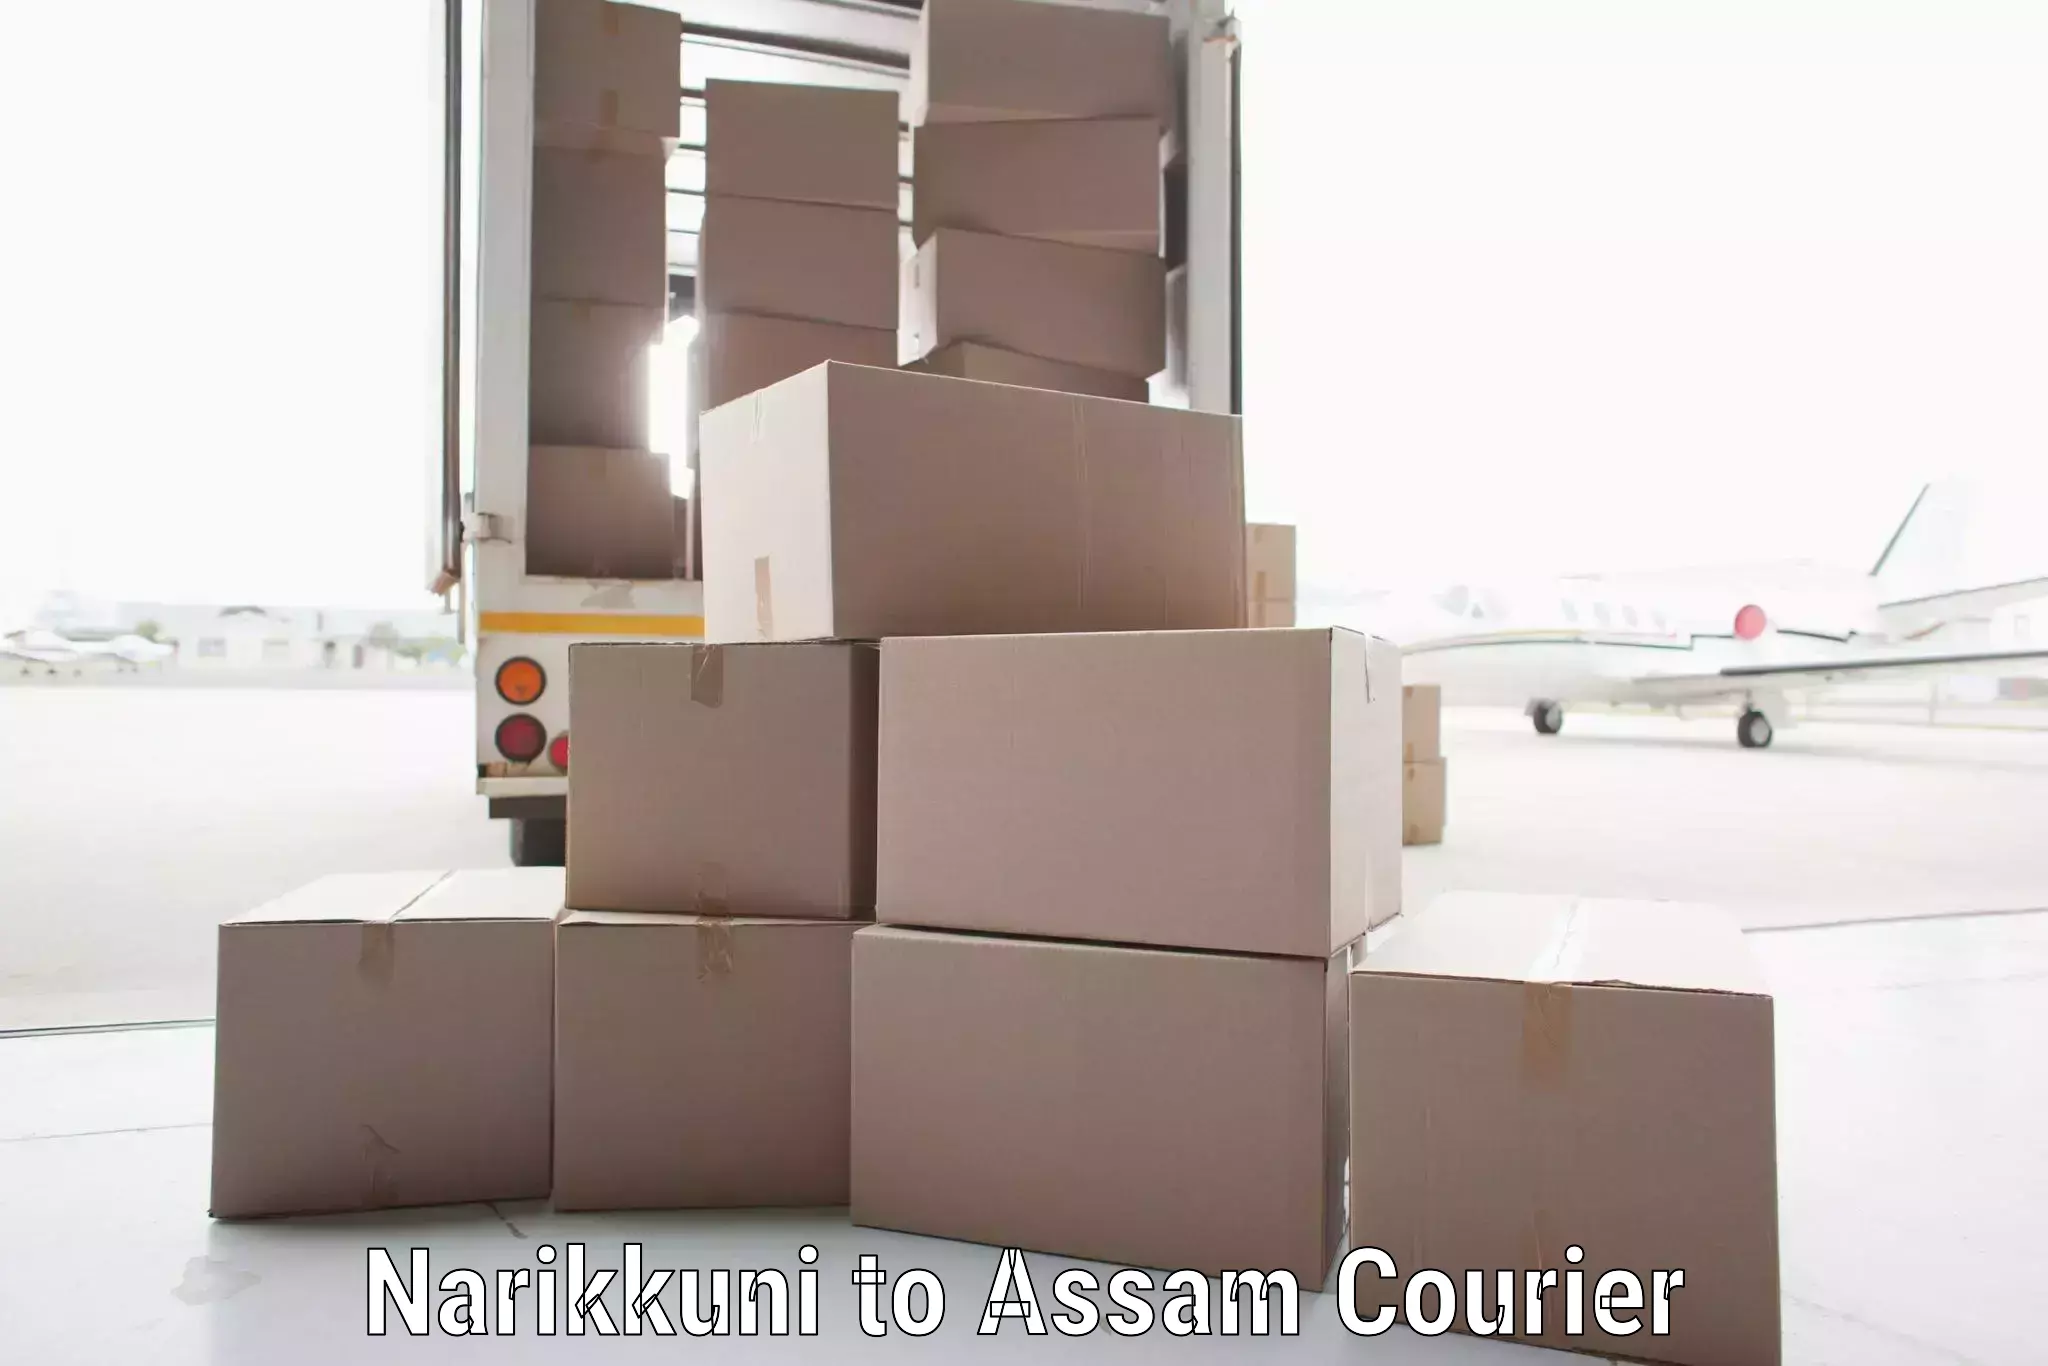 Express package handling Narikkuni to Assam